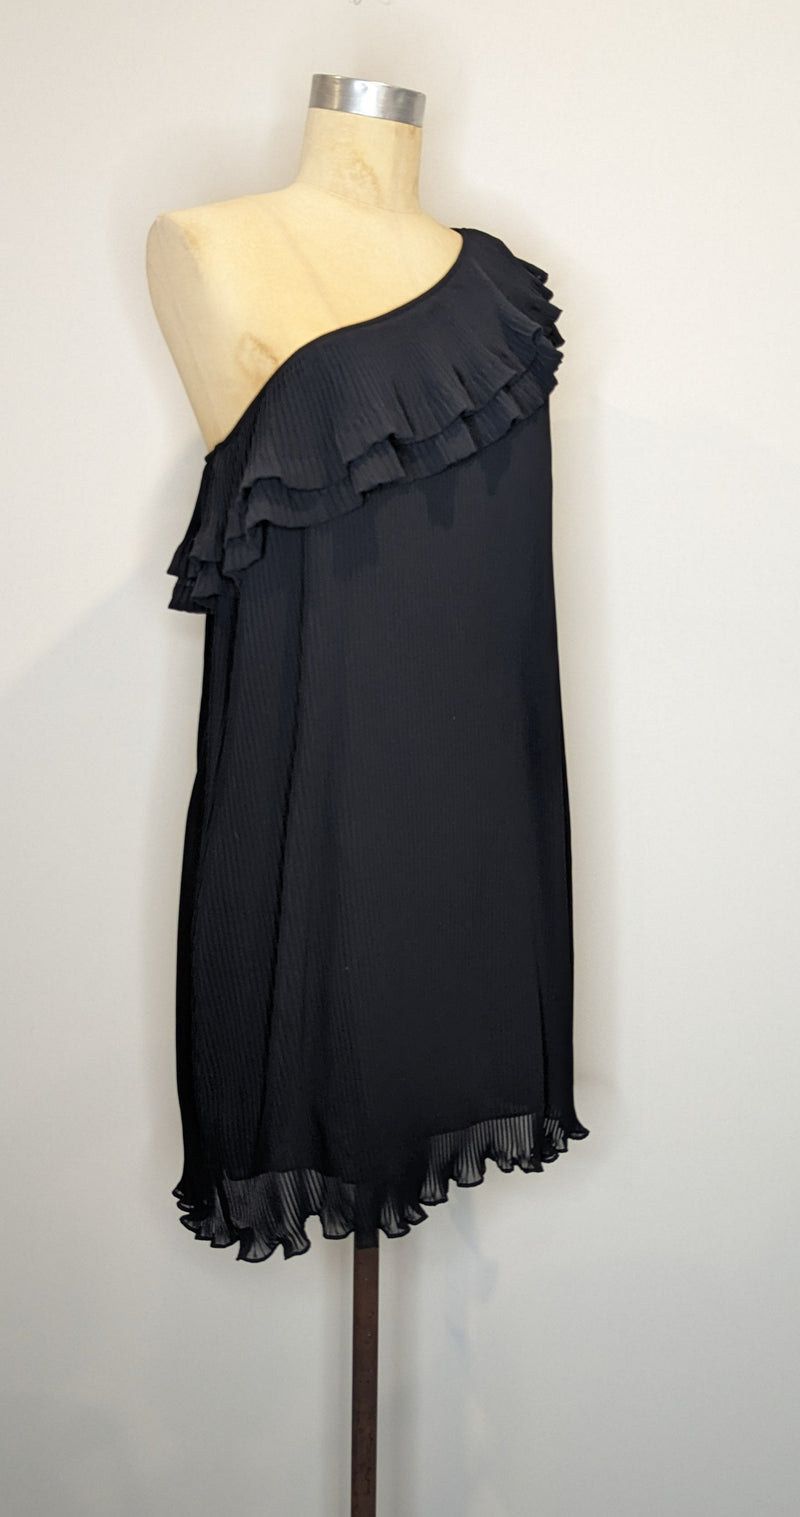 Nicola Finetti Black One Shoulder Pleated Dress